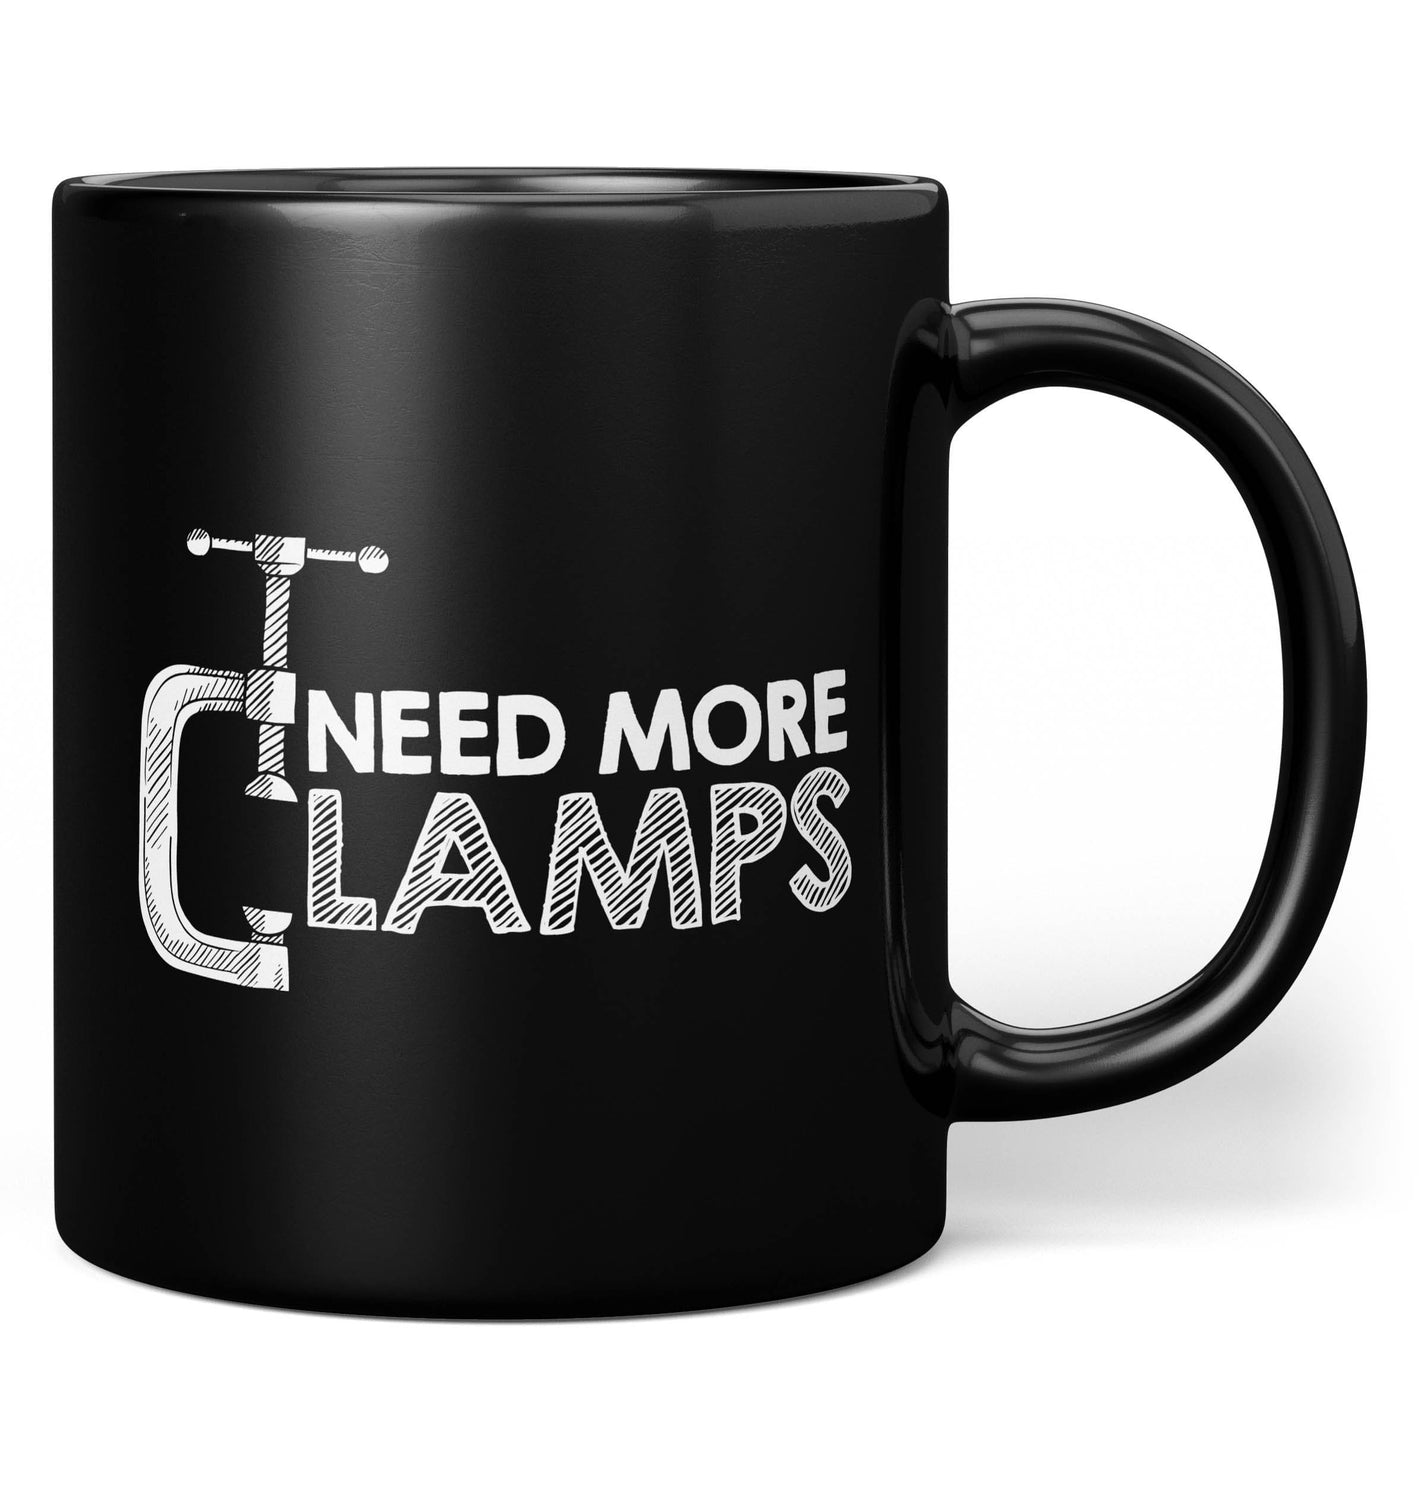 Need More Clamps - Coffee Mug / Tea Cup